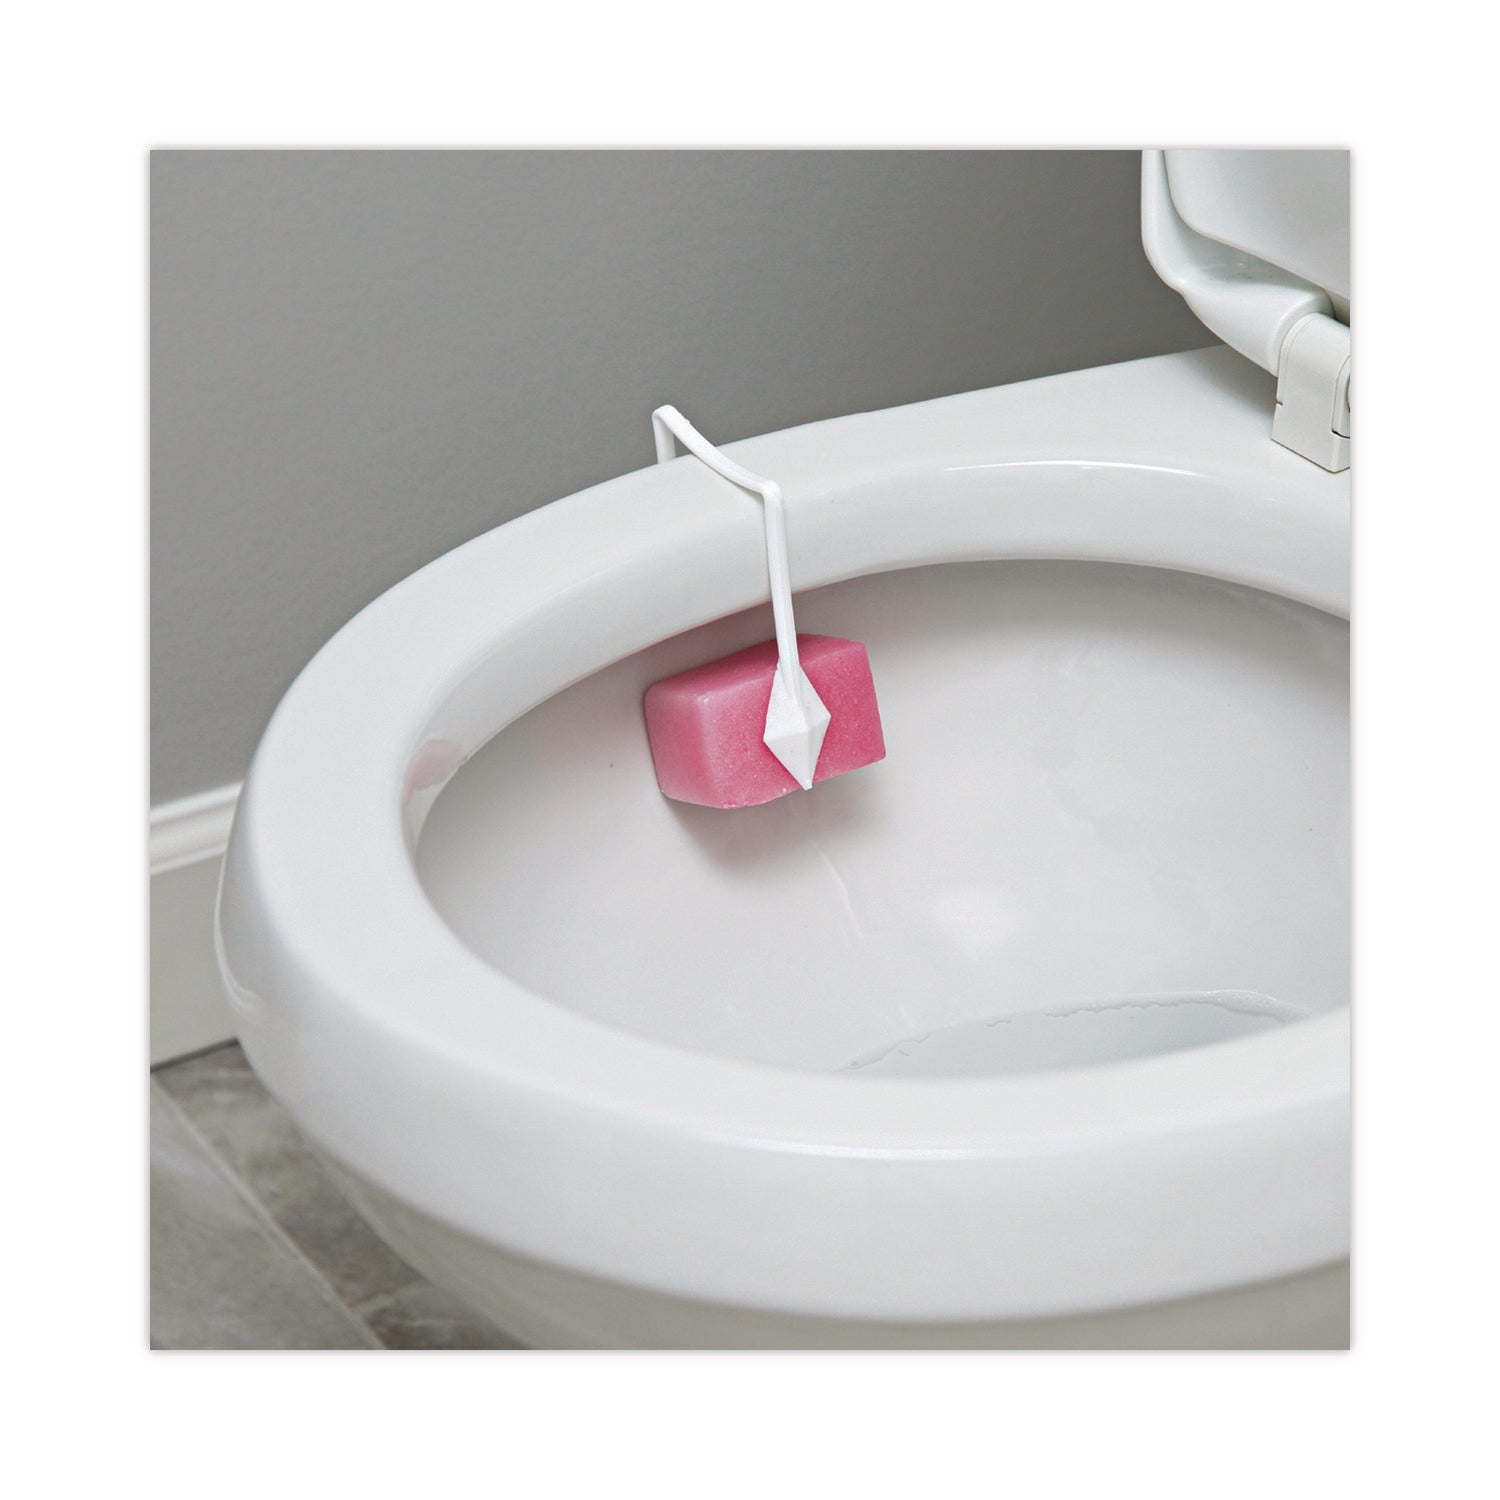 Toilet Bowl Para Deodorizer Block, Cherry Scent, 4 oz, Pink, 12/Box - 5